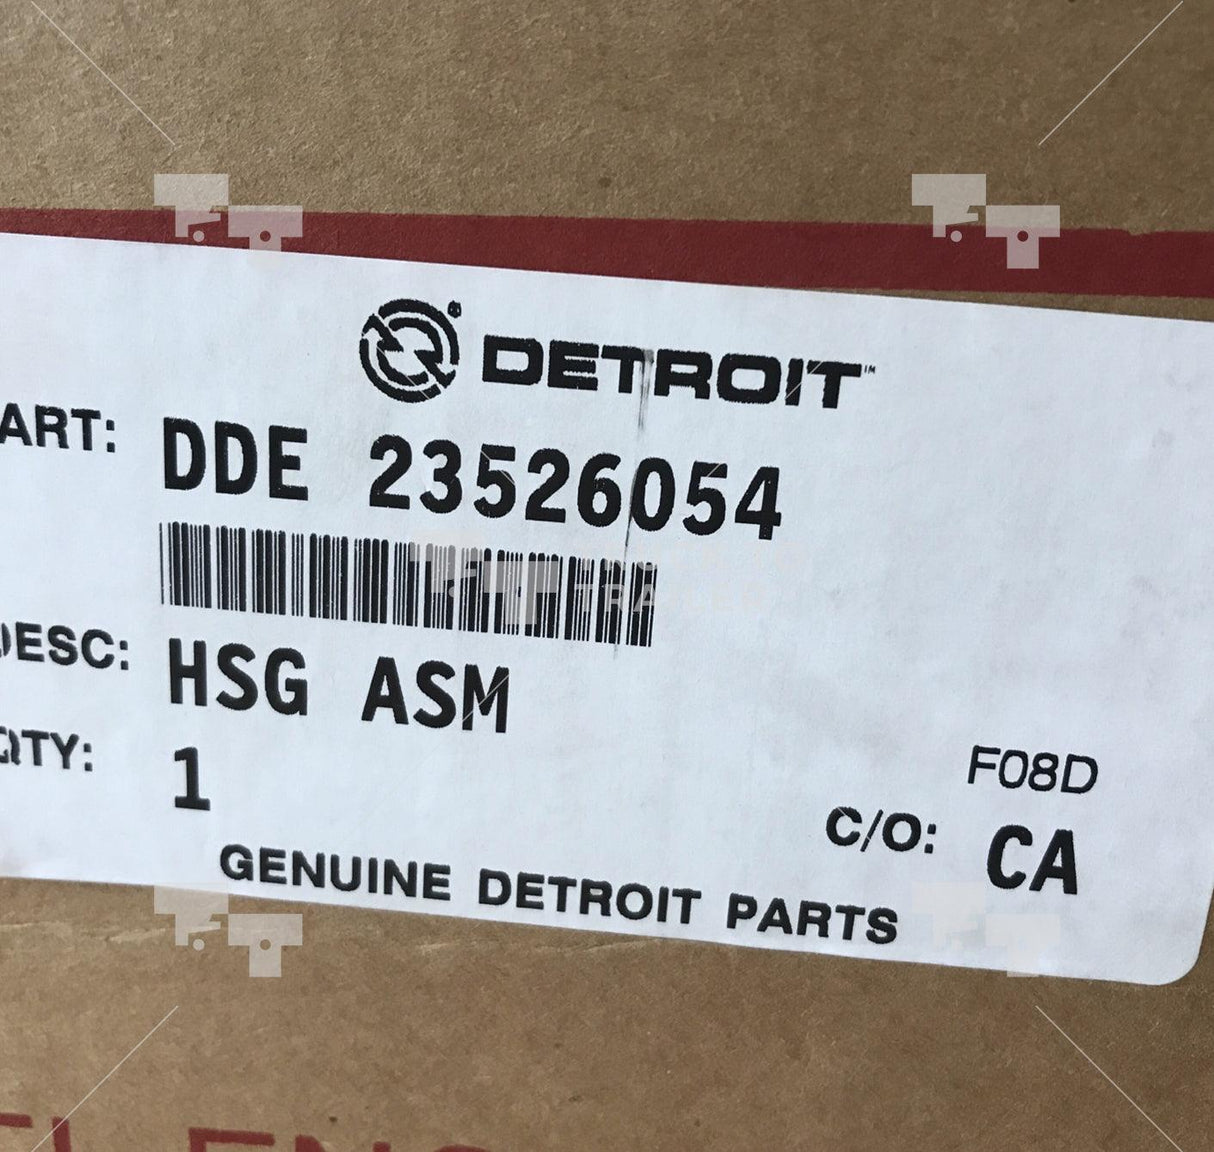 23526054 Genuine Detroit Diesel® Oil Cooler Housing Assembly Top 60 Series.